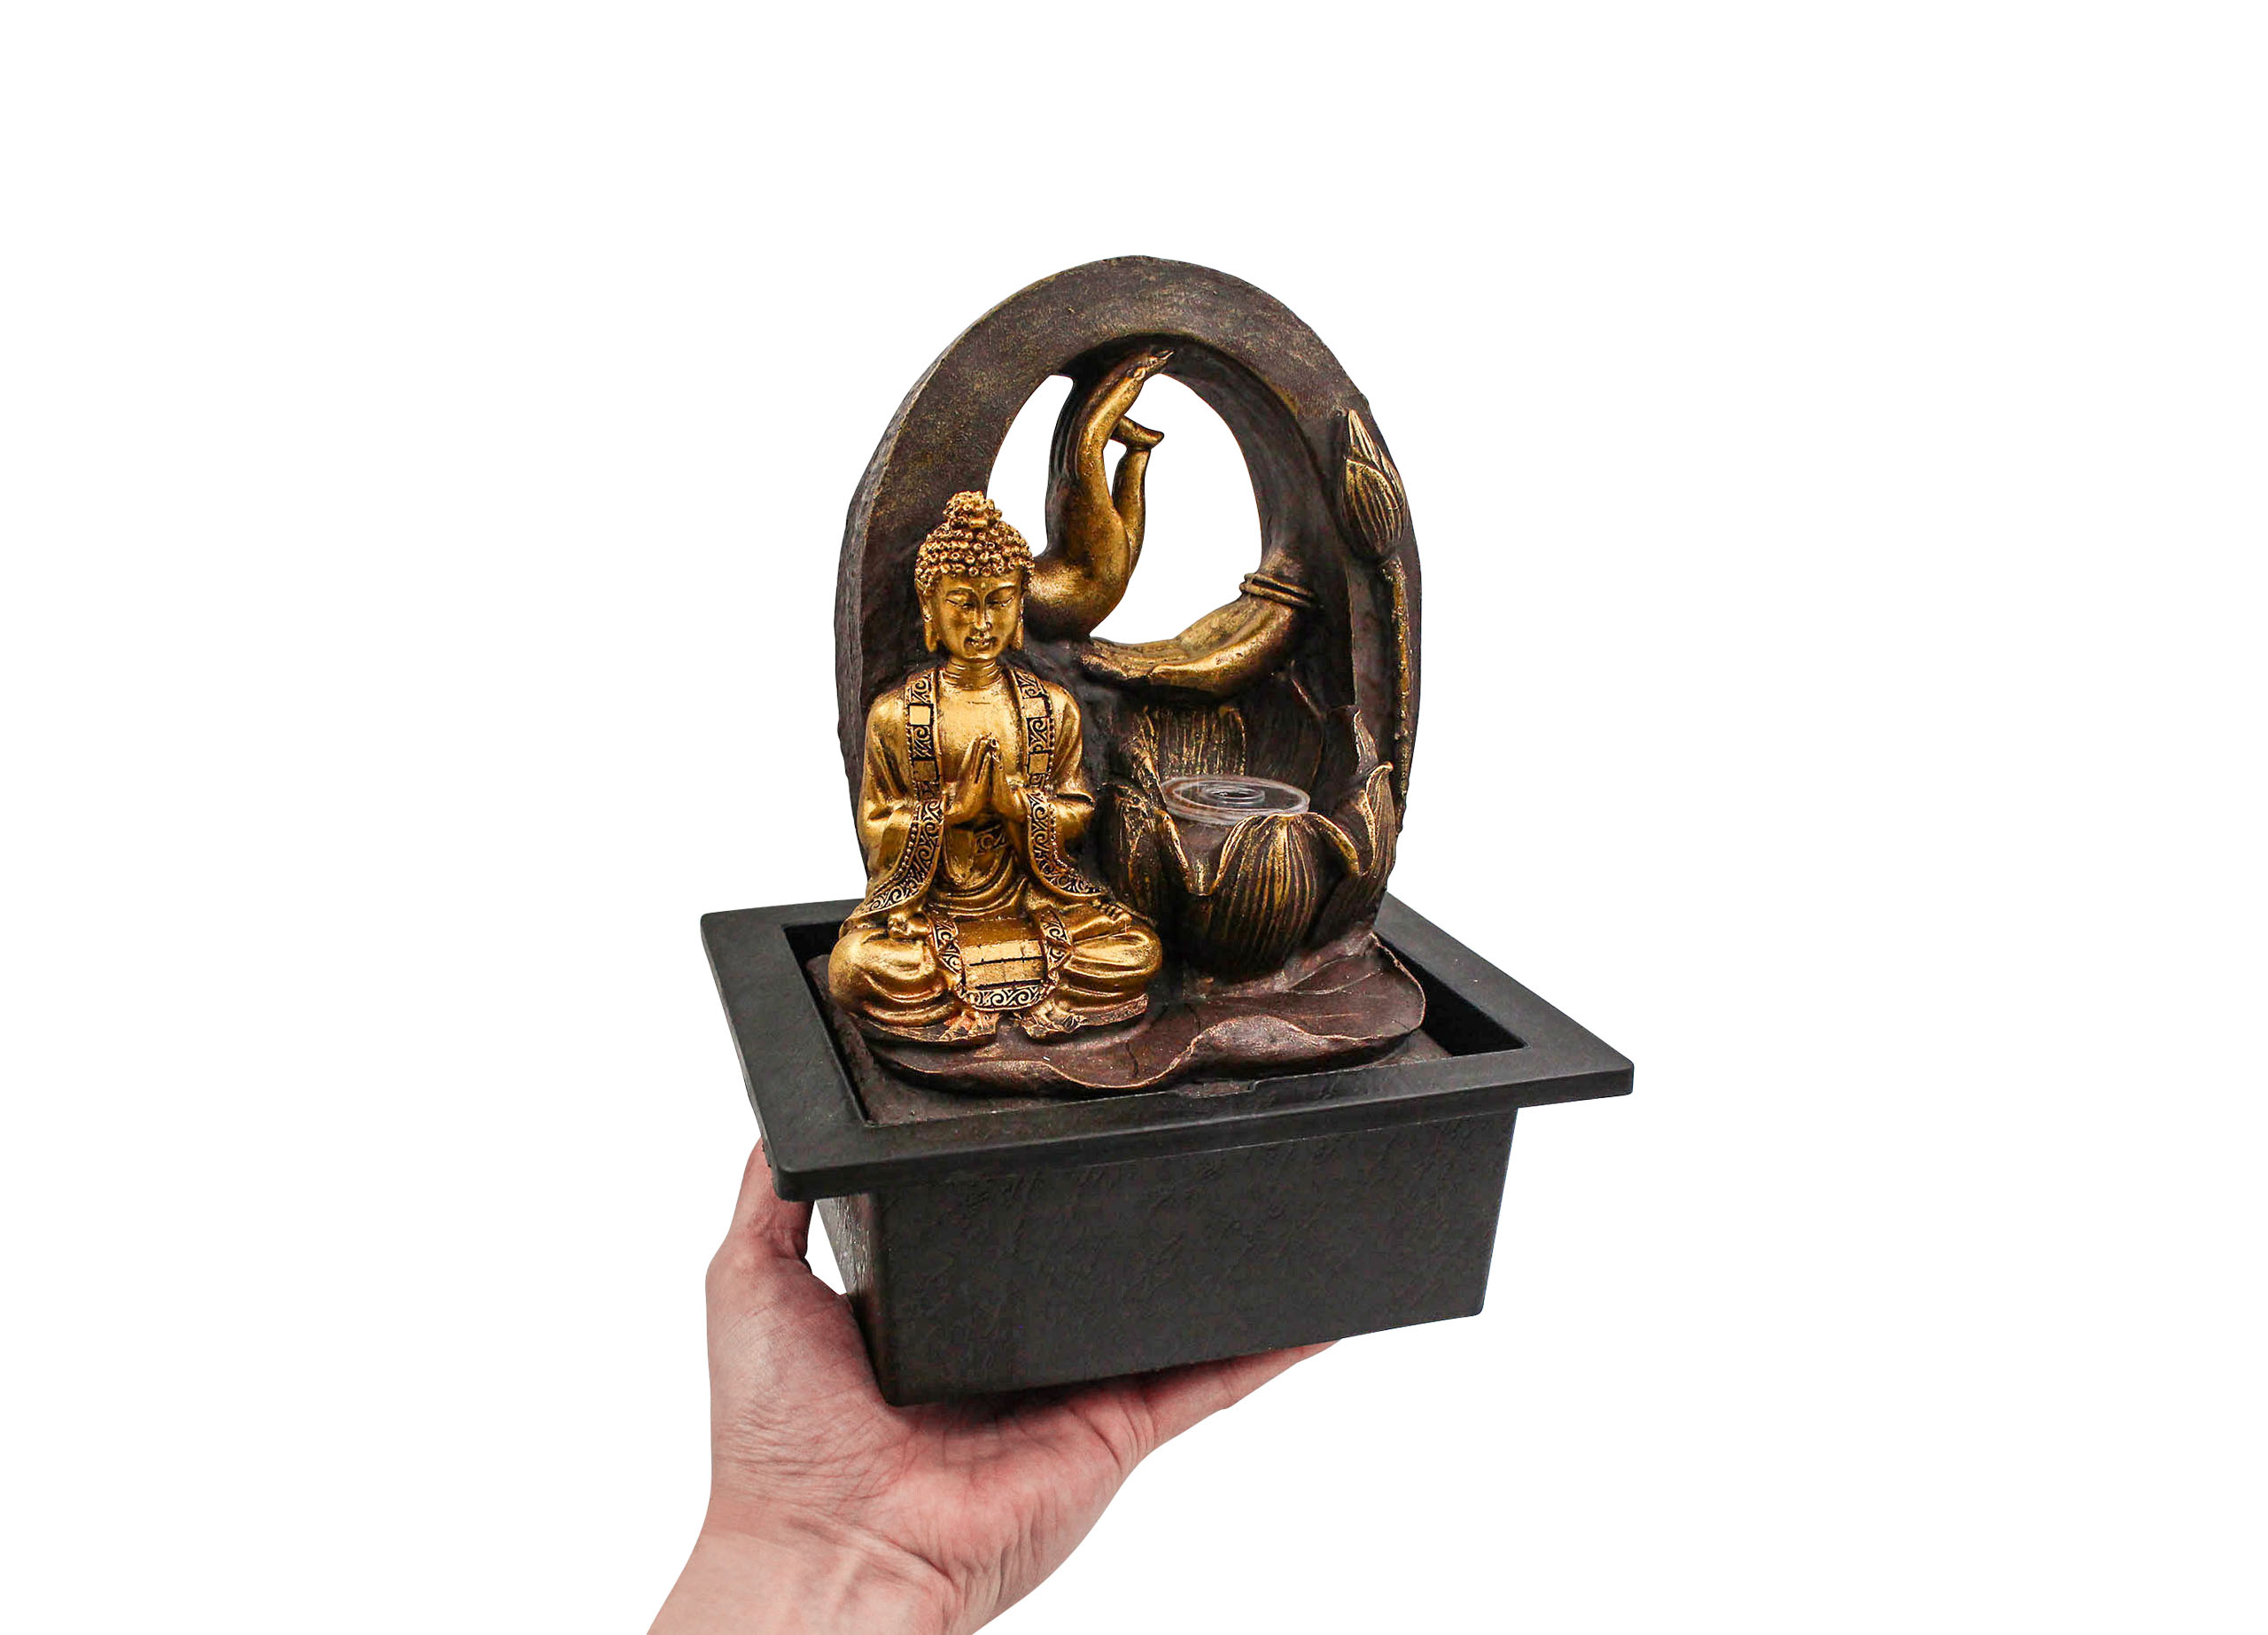 Golden Hand & Sitting Buddha Water Fountain - Crystal Dreams